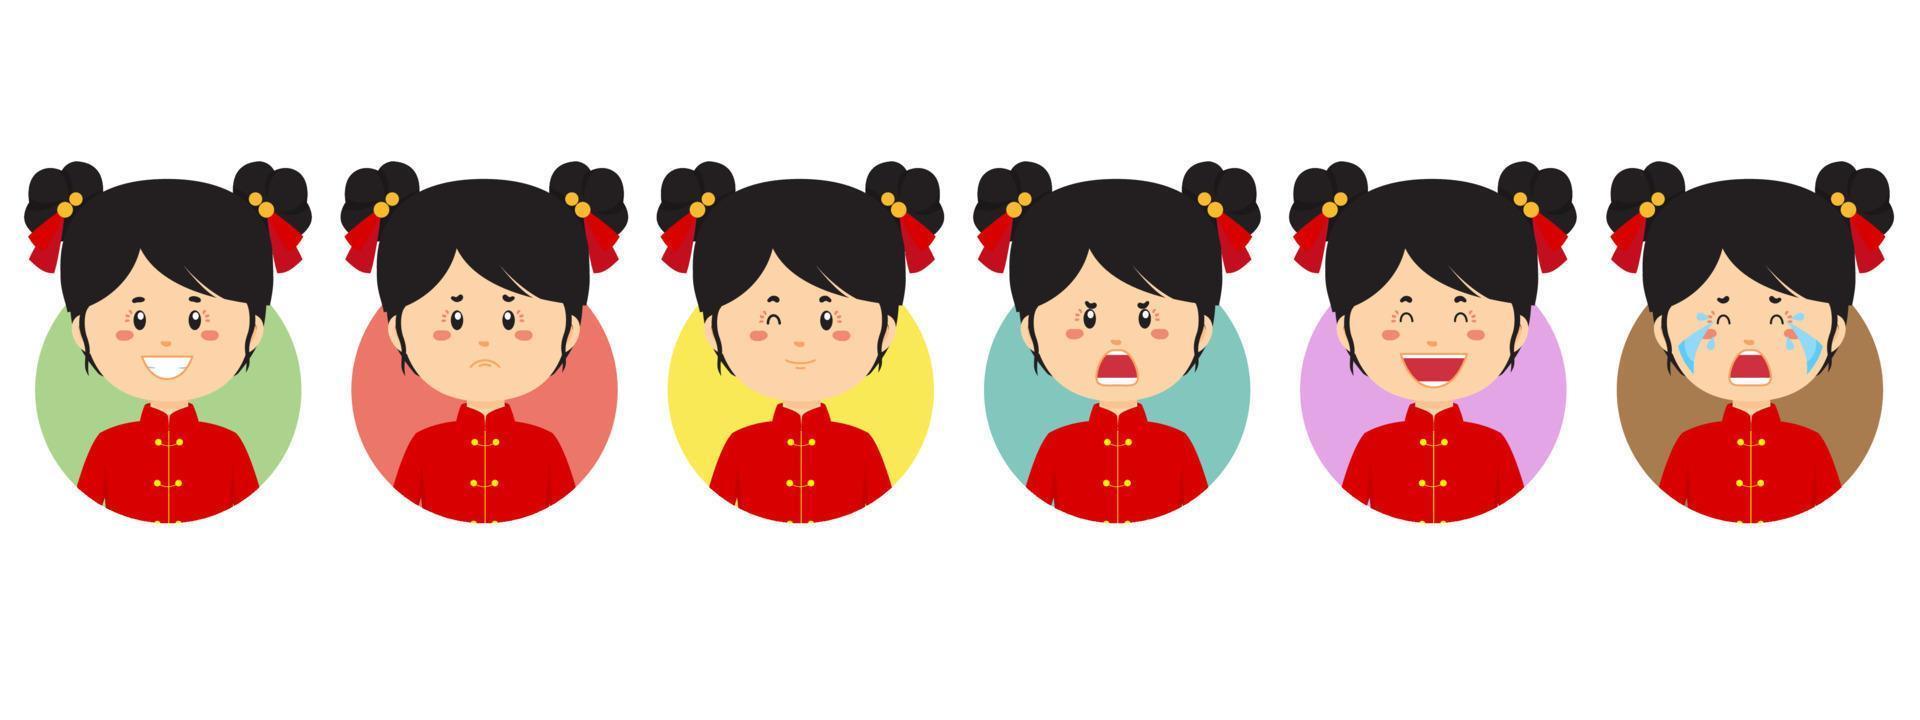 avatar cinese con varie espressioni vettore